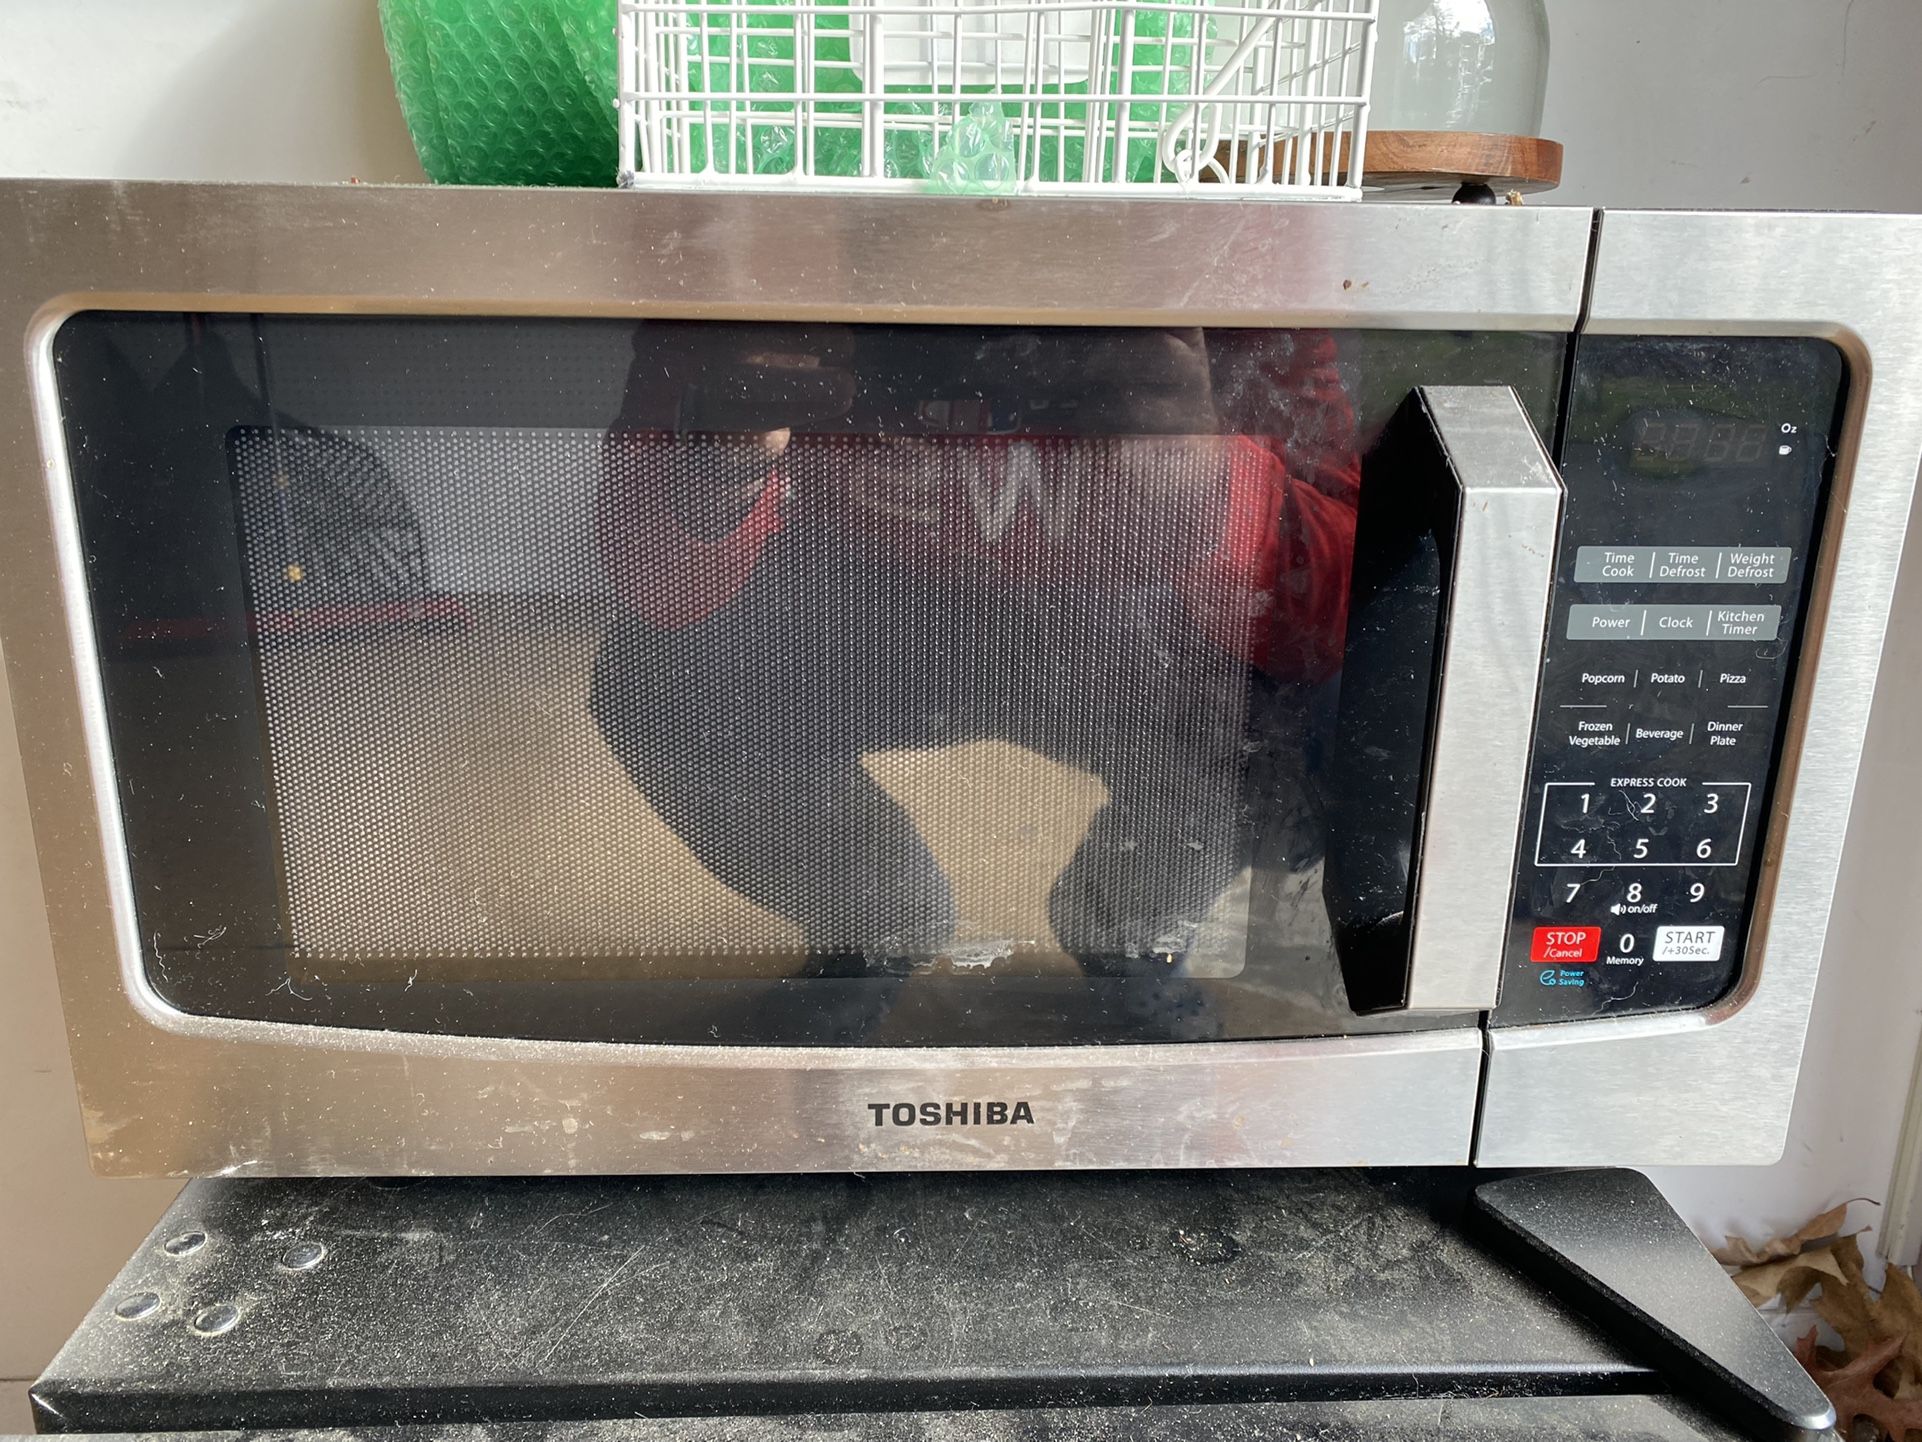 Toshibia Microwave